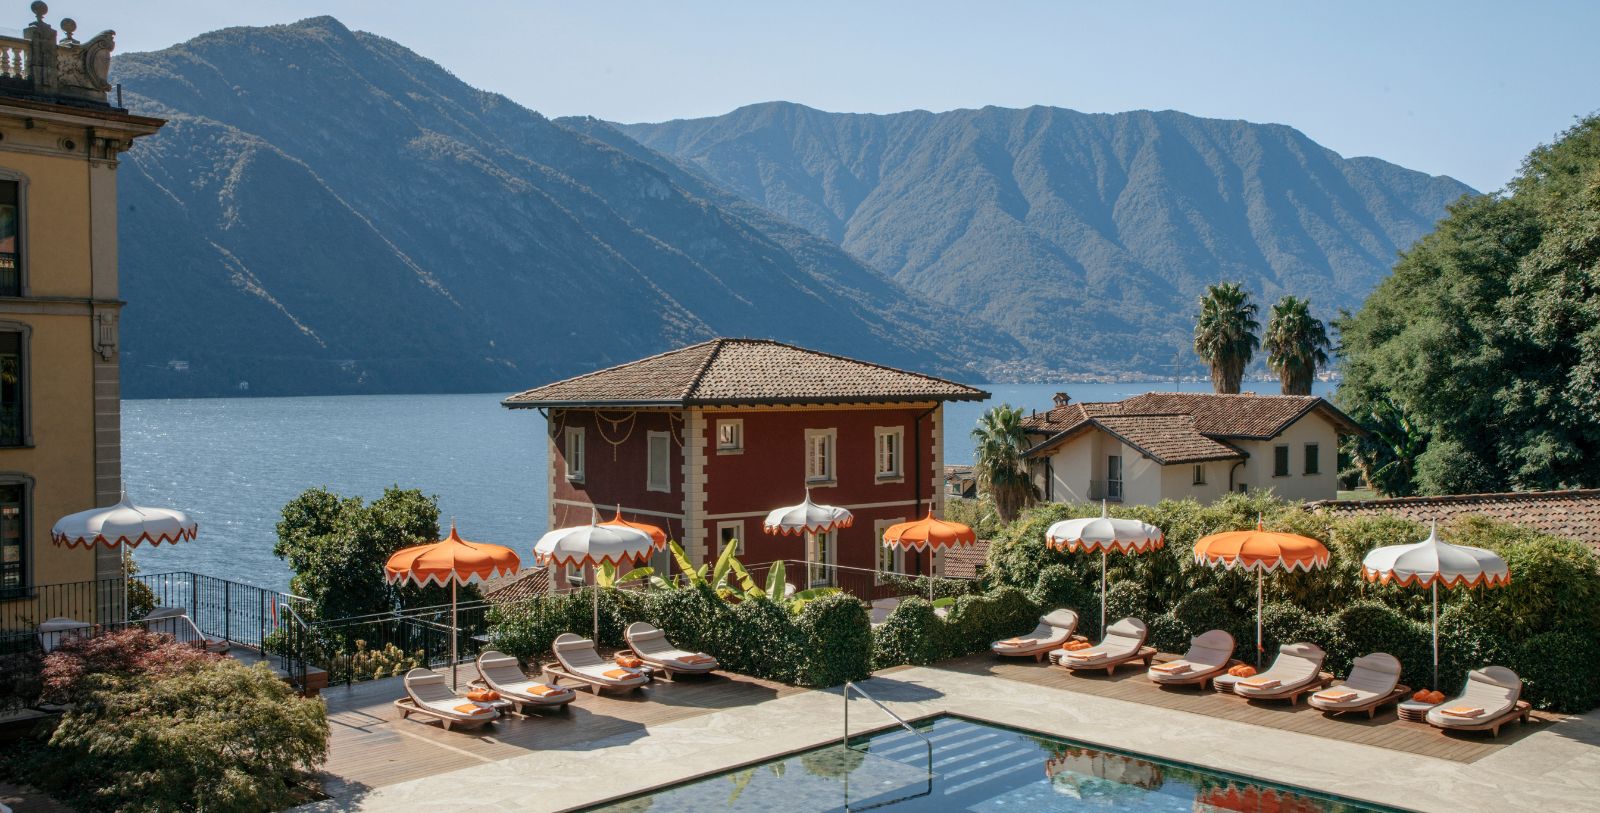 Discover the wonderful Villa Carlotta minutes away along the shore of Lake Como.